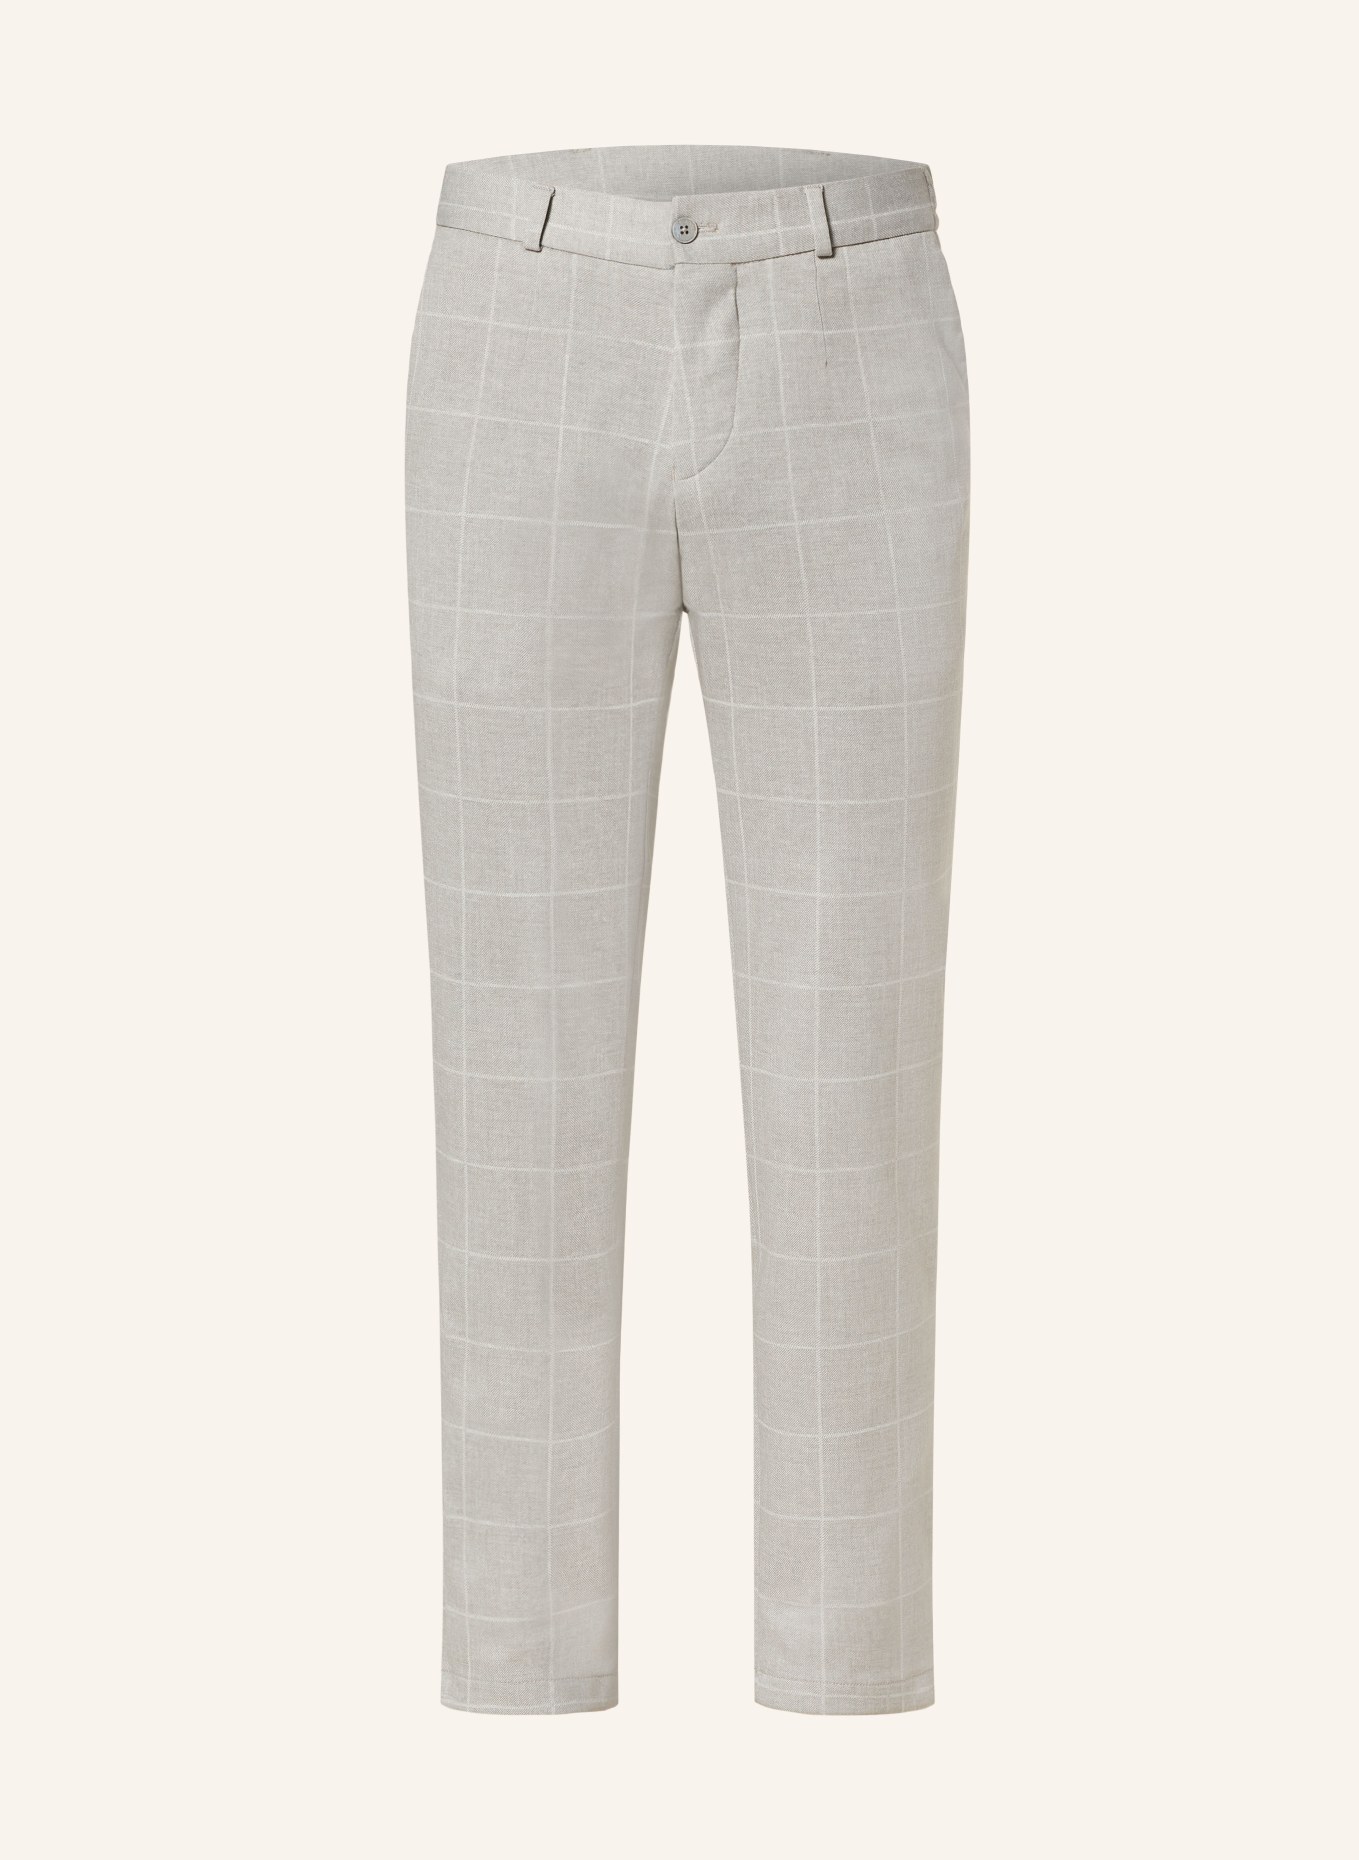 PAUL Anzughose Extra Slim Fit aus Jersey, Farbe: 220 SAND (Bild 1)